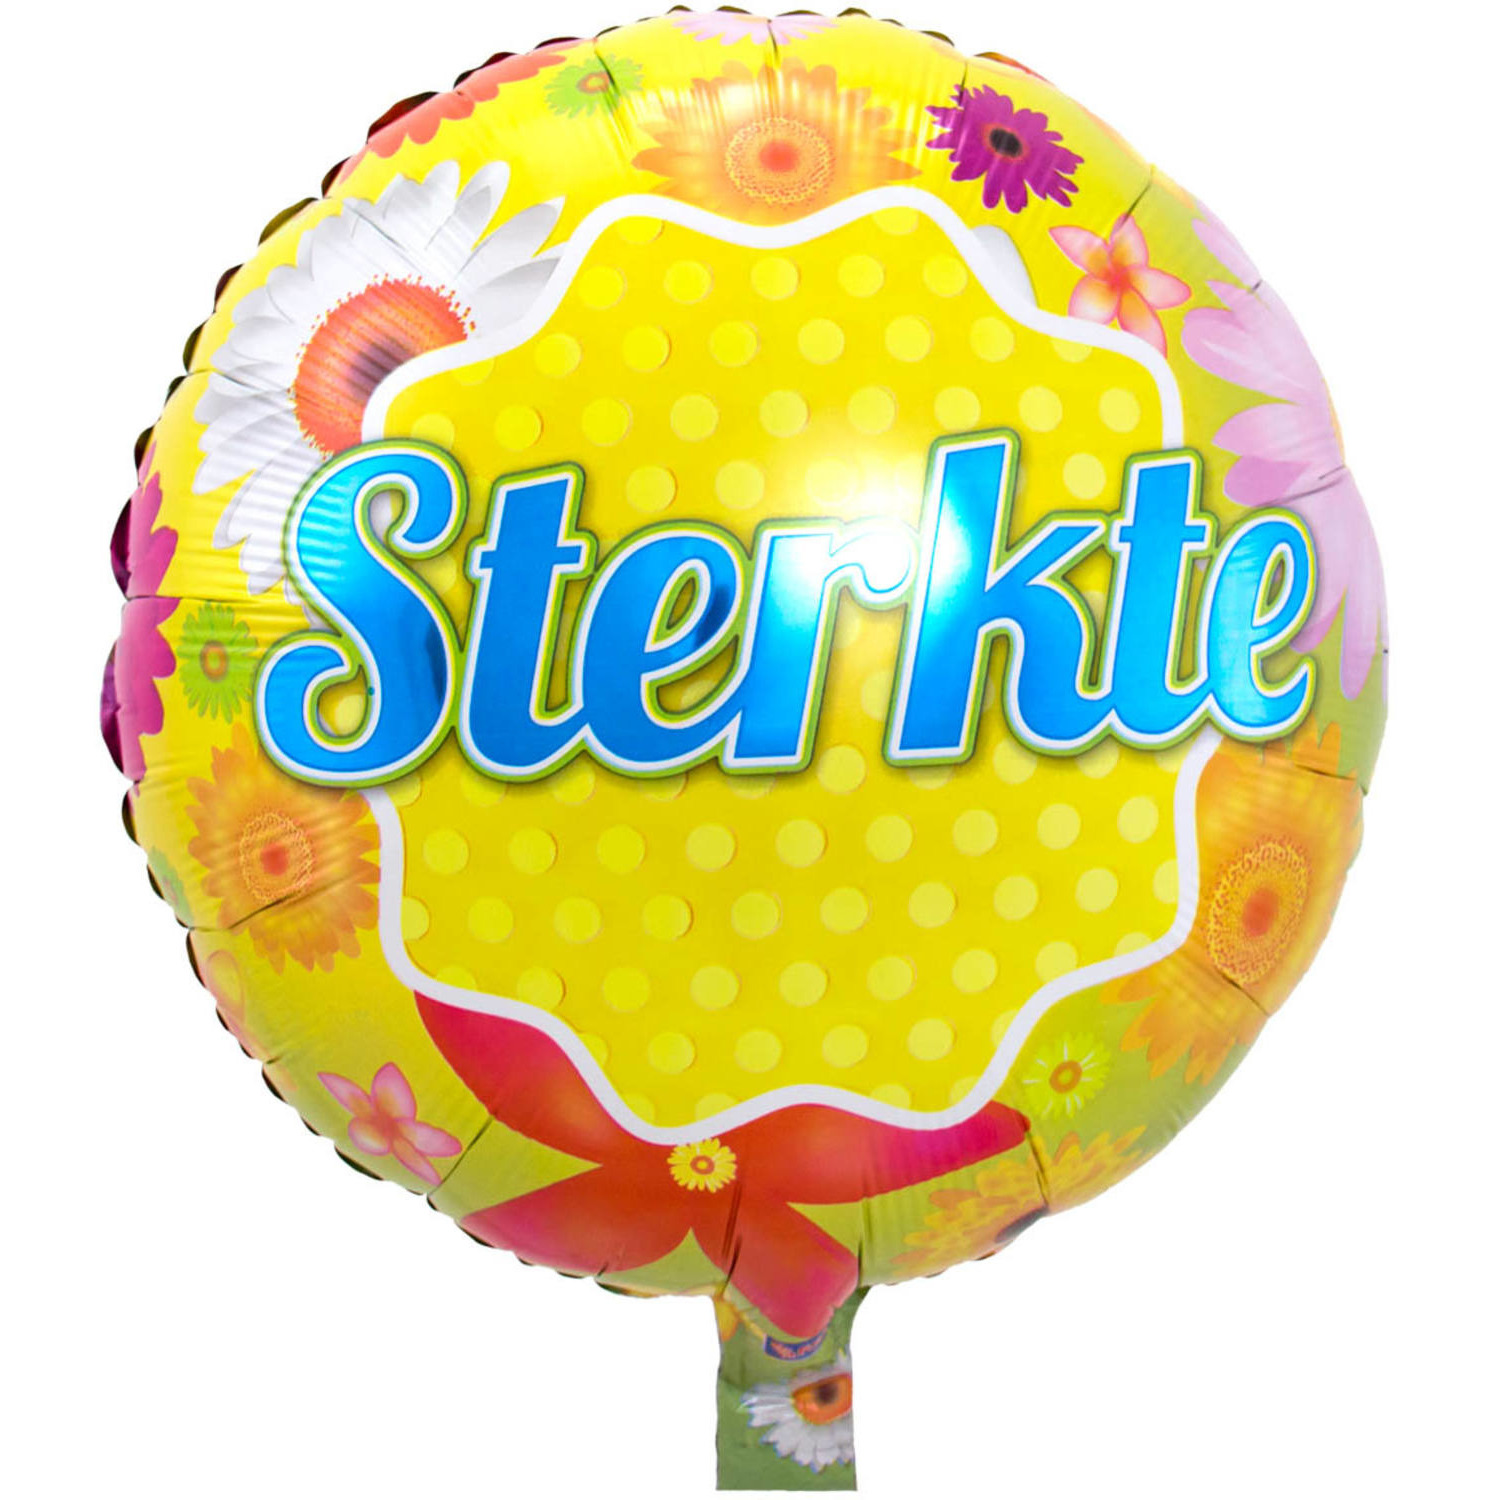 Folie ballon Sterkte 46 cm met helium gevuld